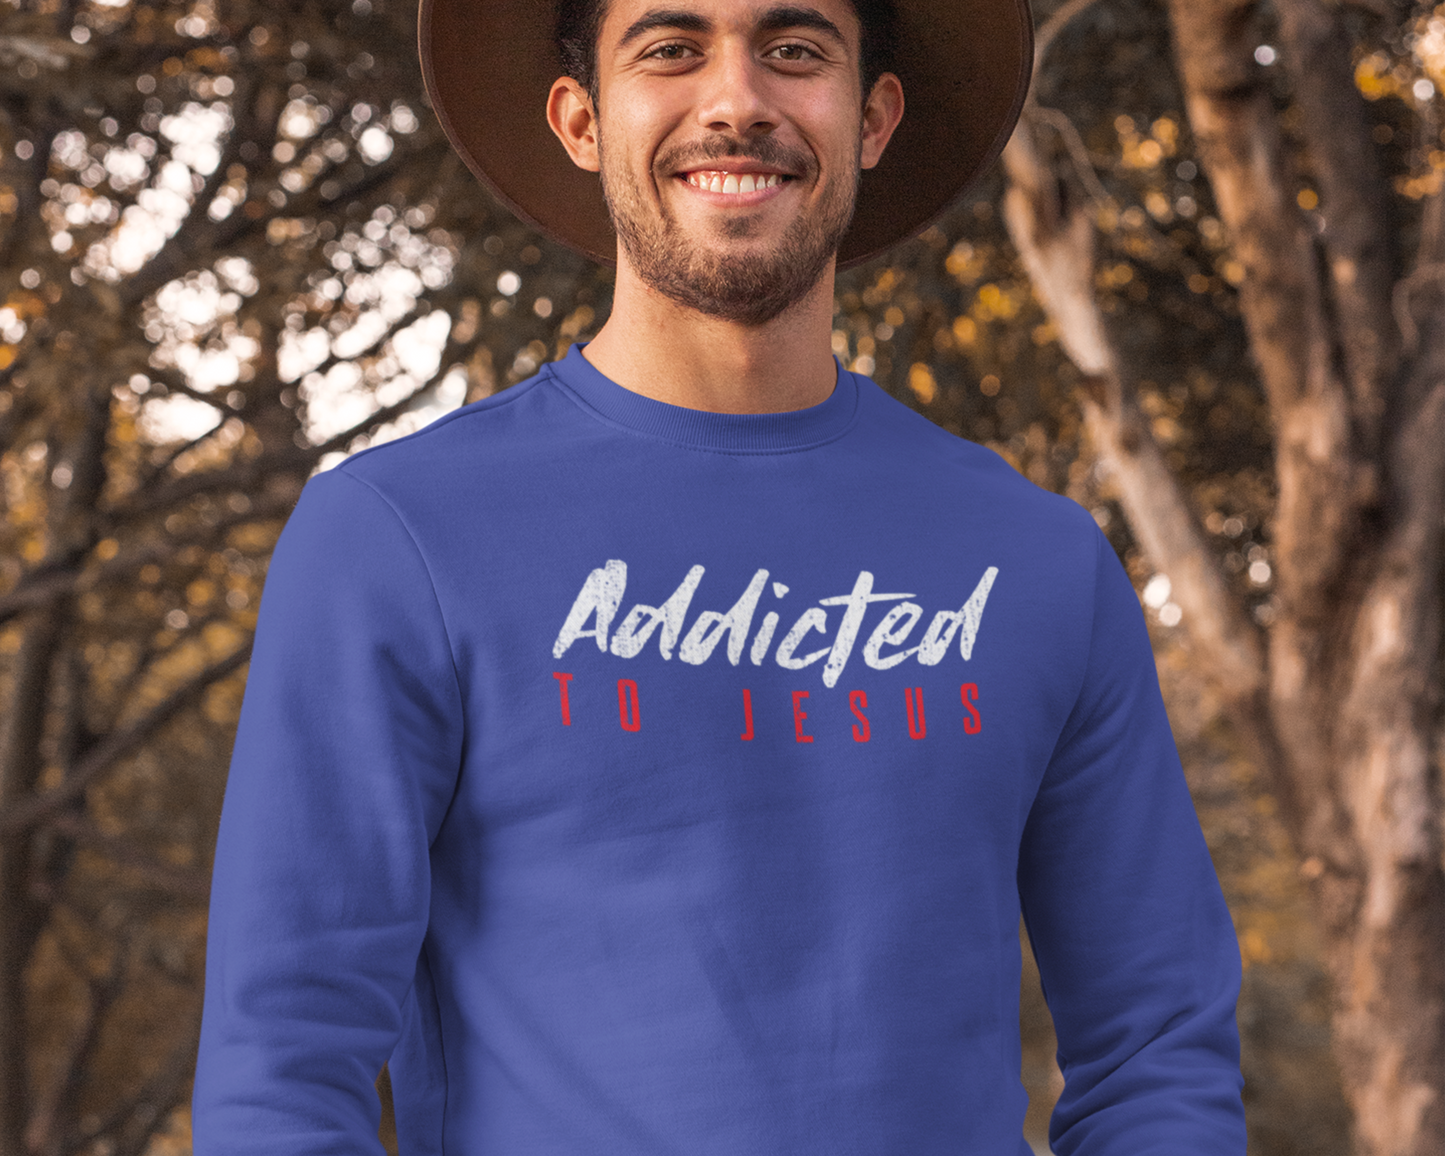 Addicted To Jesus Christian Sweatshirt For Men